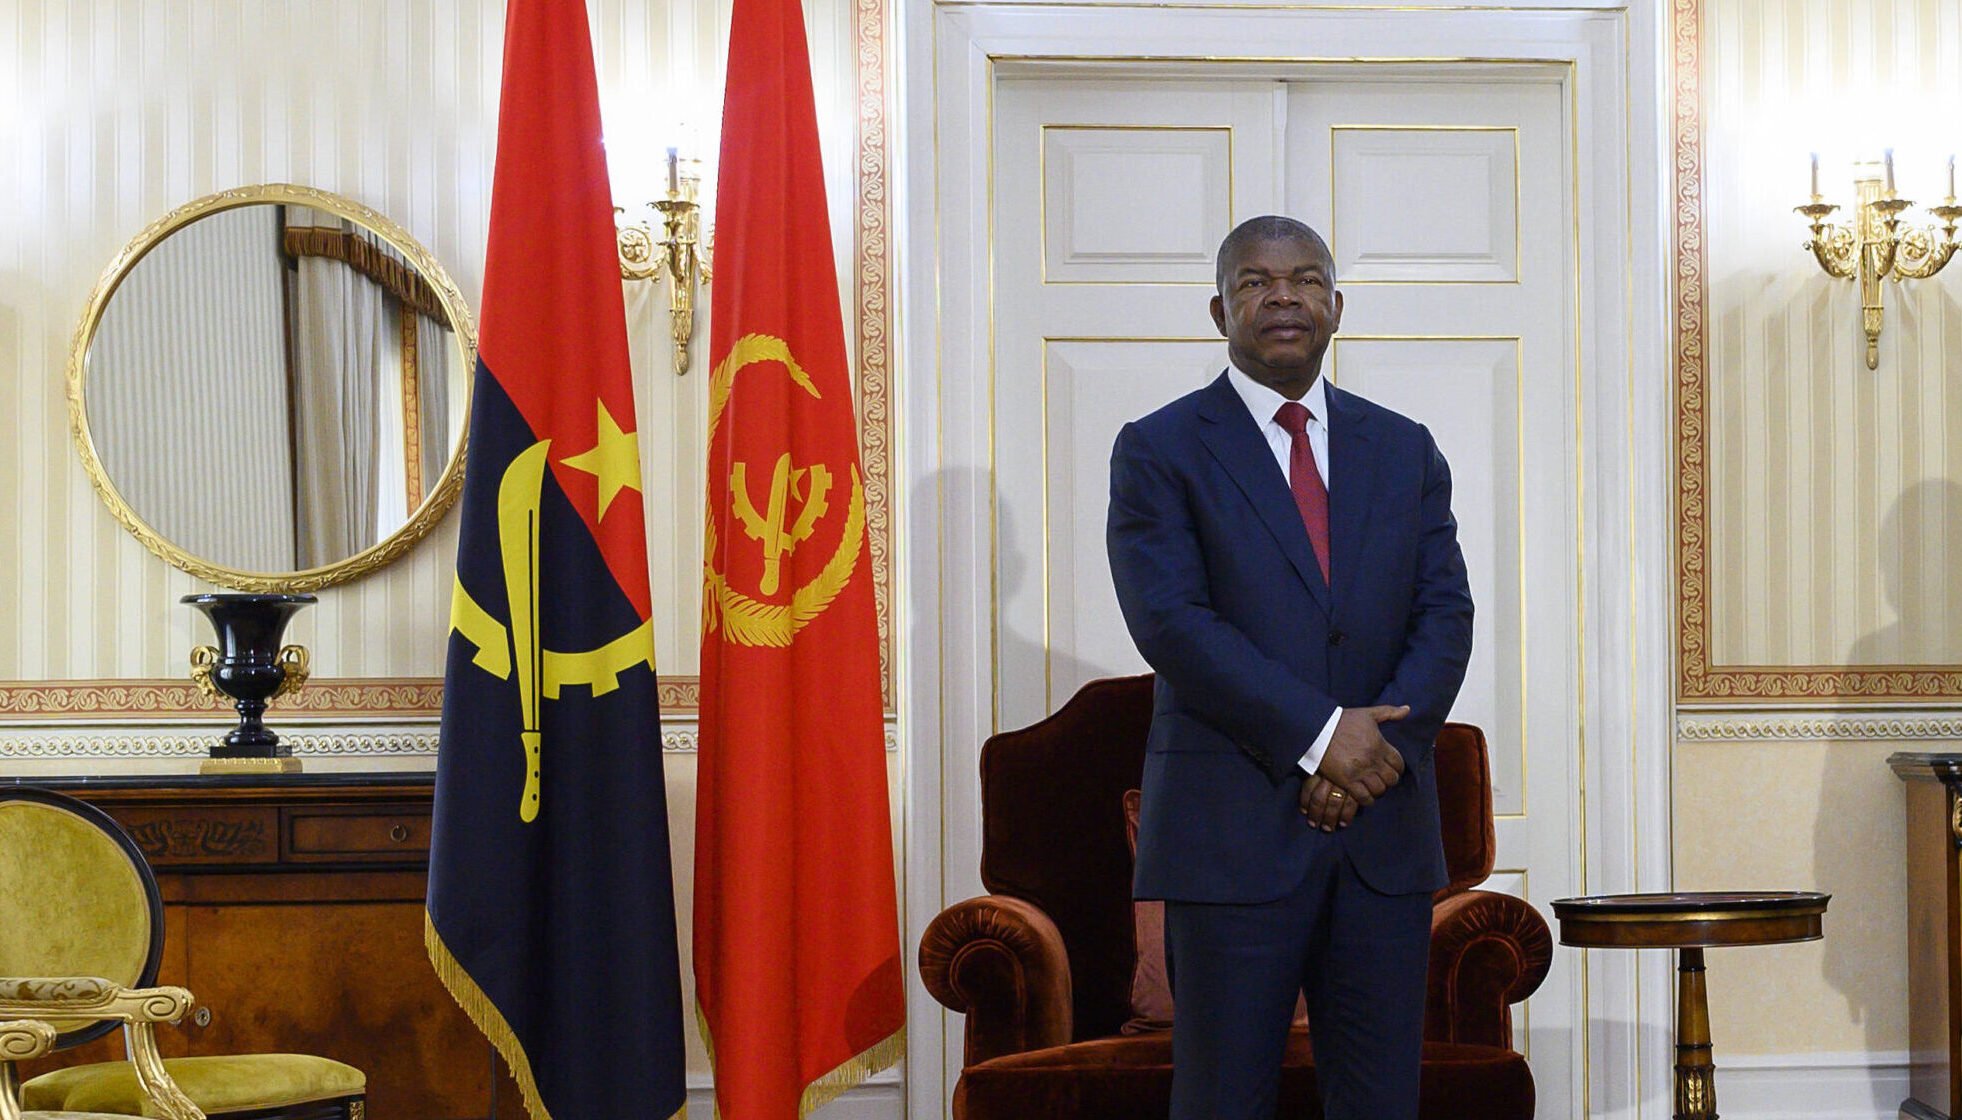 Angola: President Lourenco plans reform, fight corruption